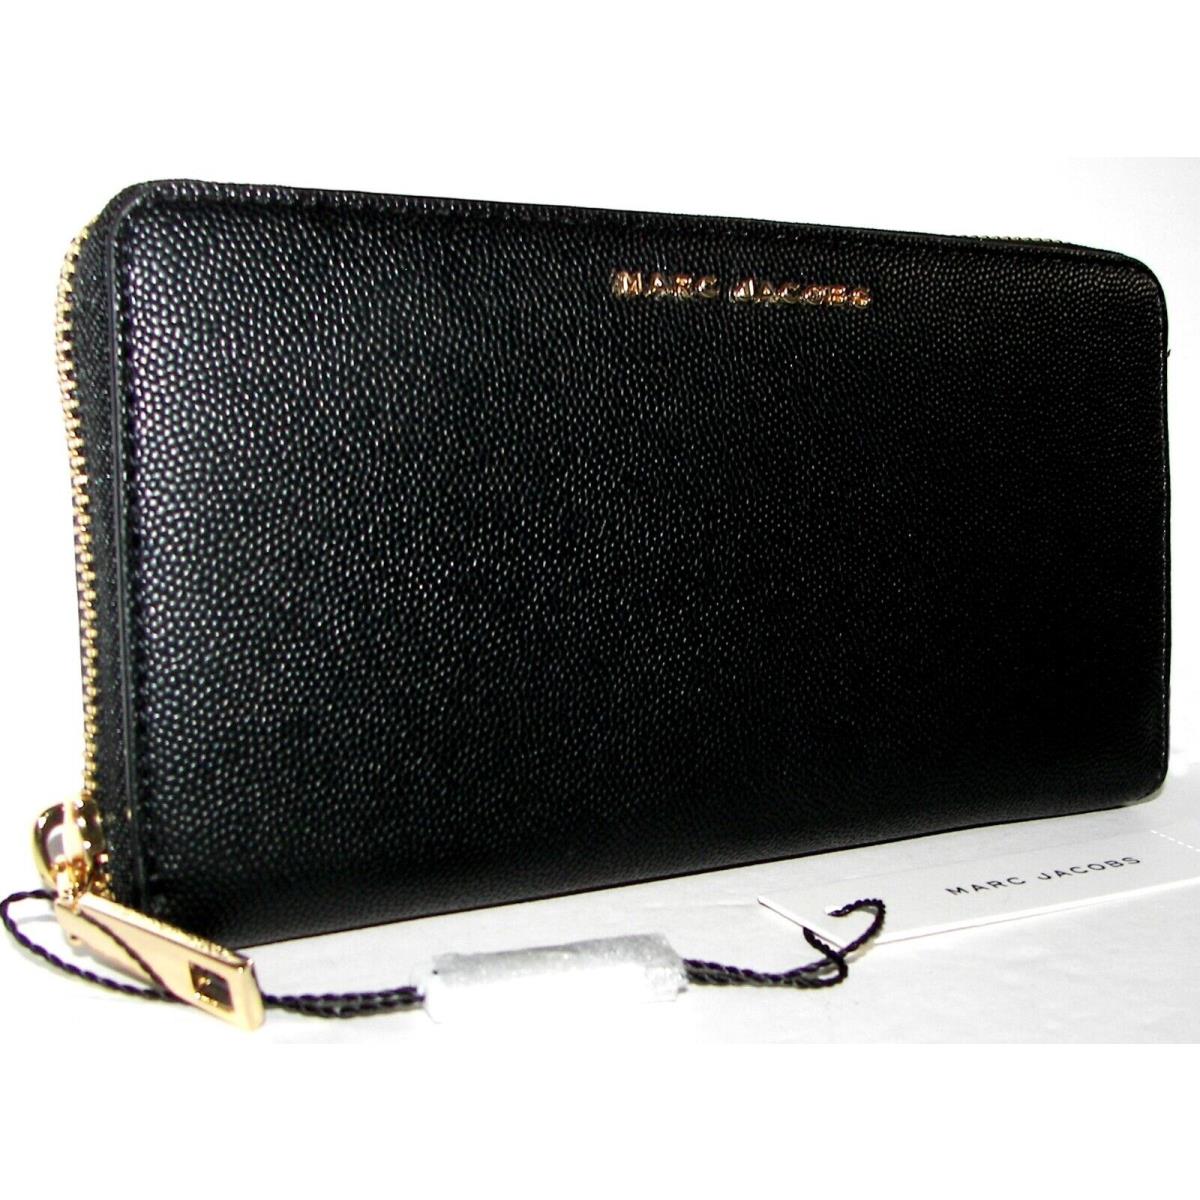 Marc Jacobs Black Leather Zip-around Clutch Wallet